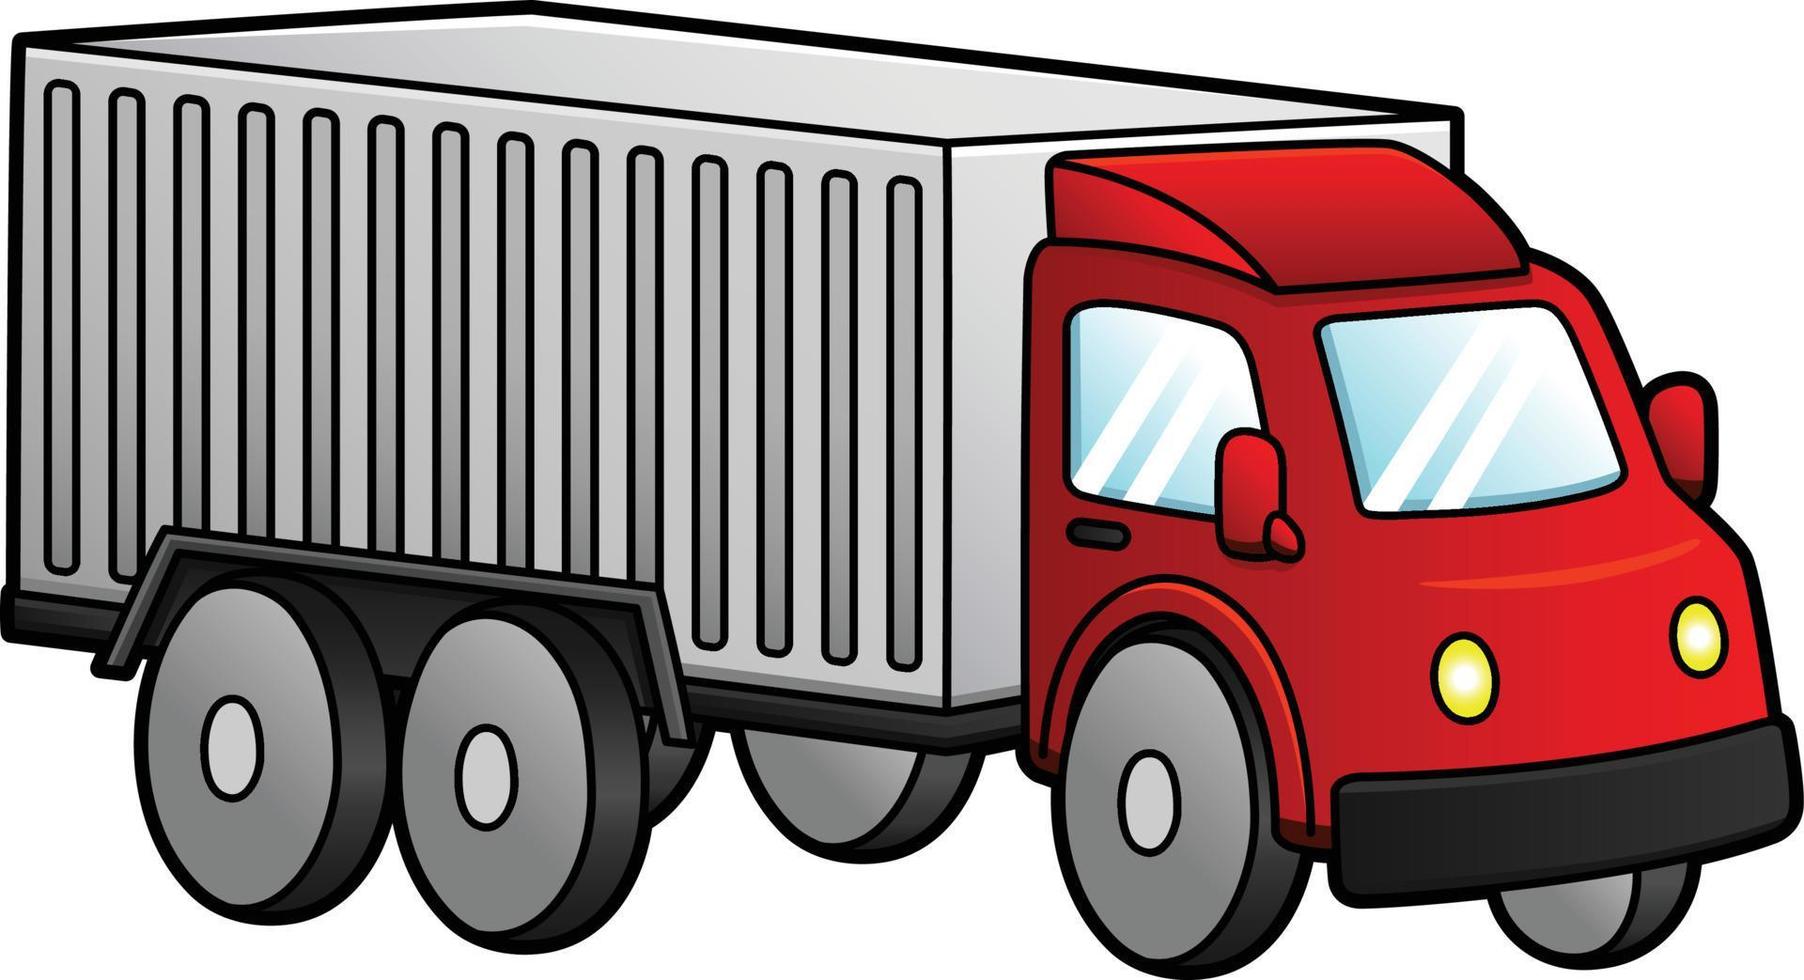 Truck Cartoon Colored Clipart Illustration vector